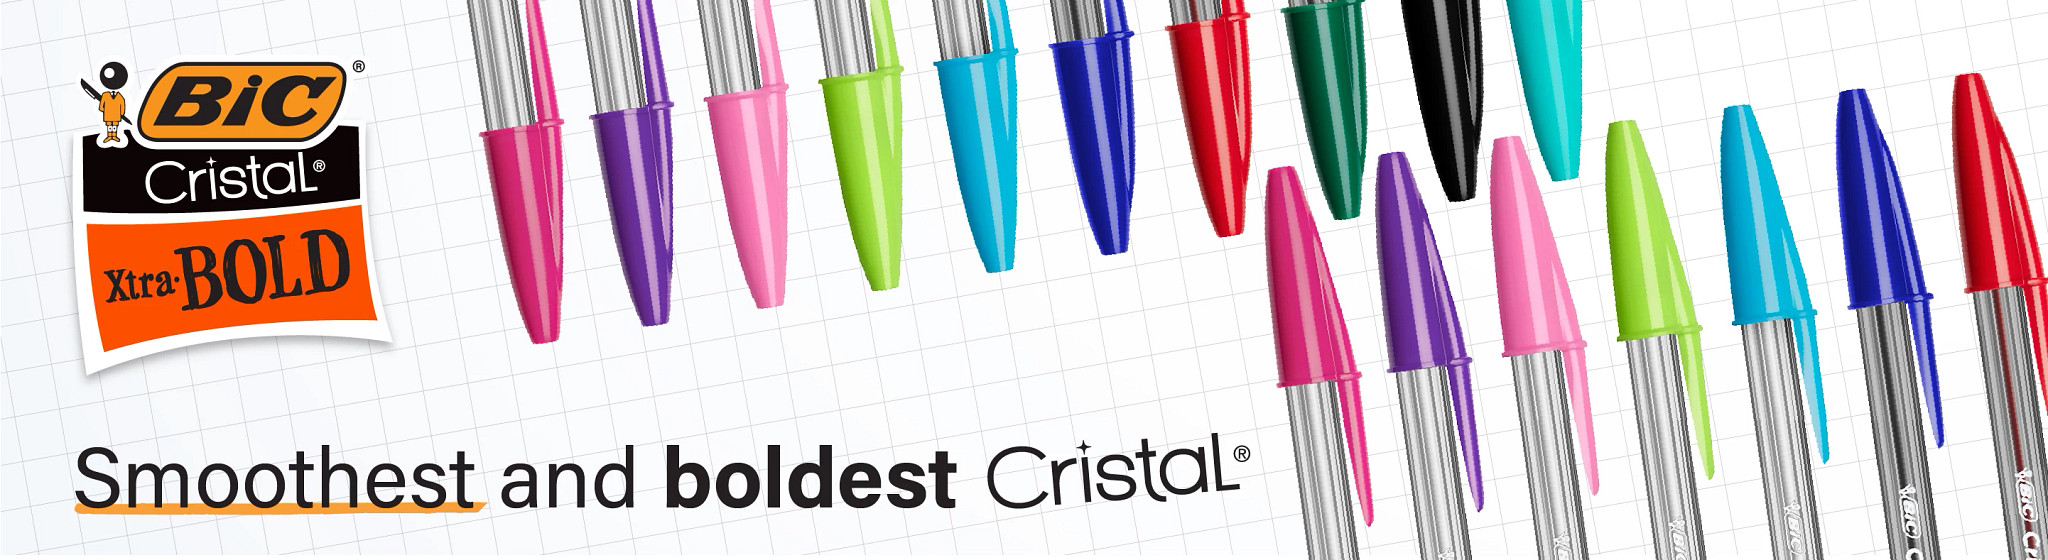 Bic Cristal Ball Pen, Bold (1.6 mm), Assorted Ink - 8 pens